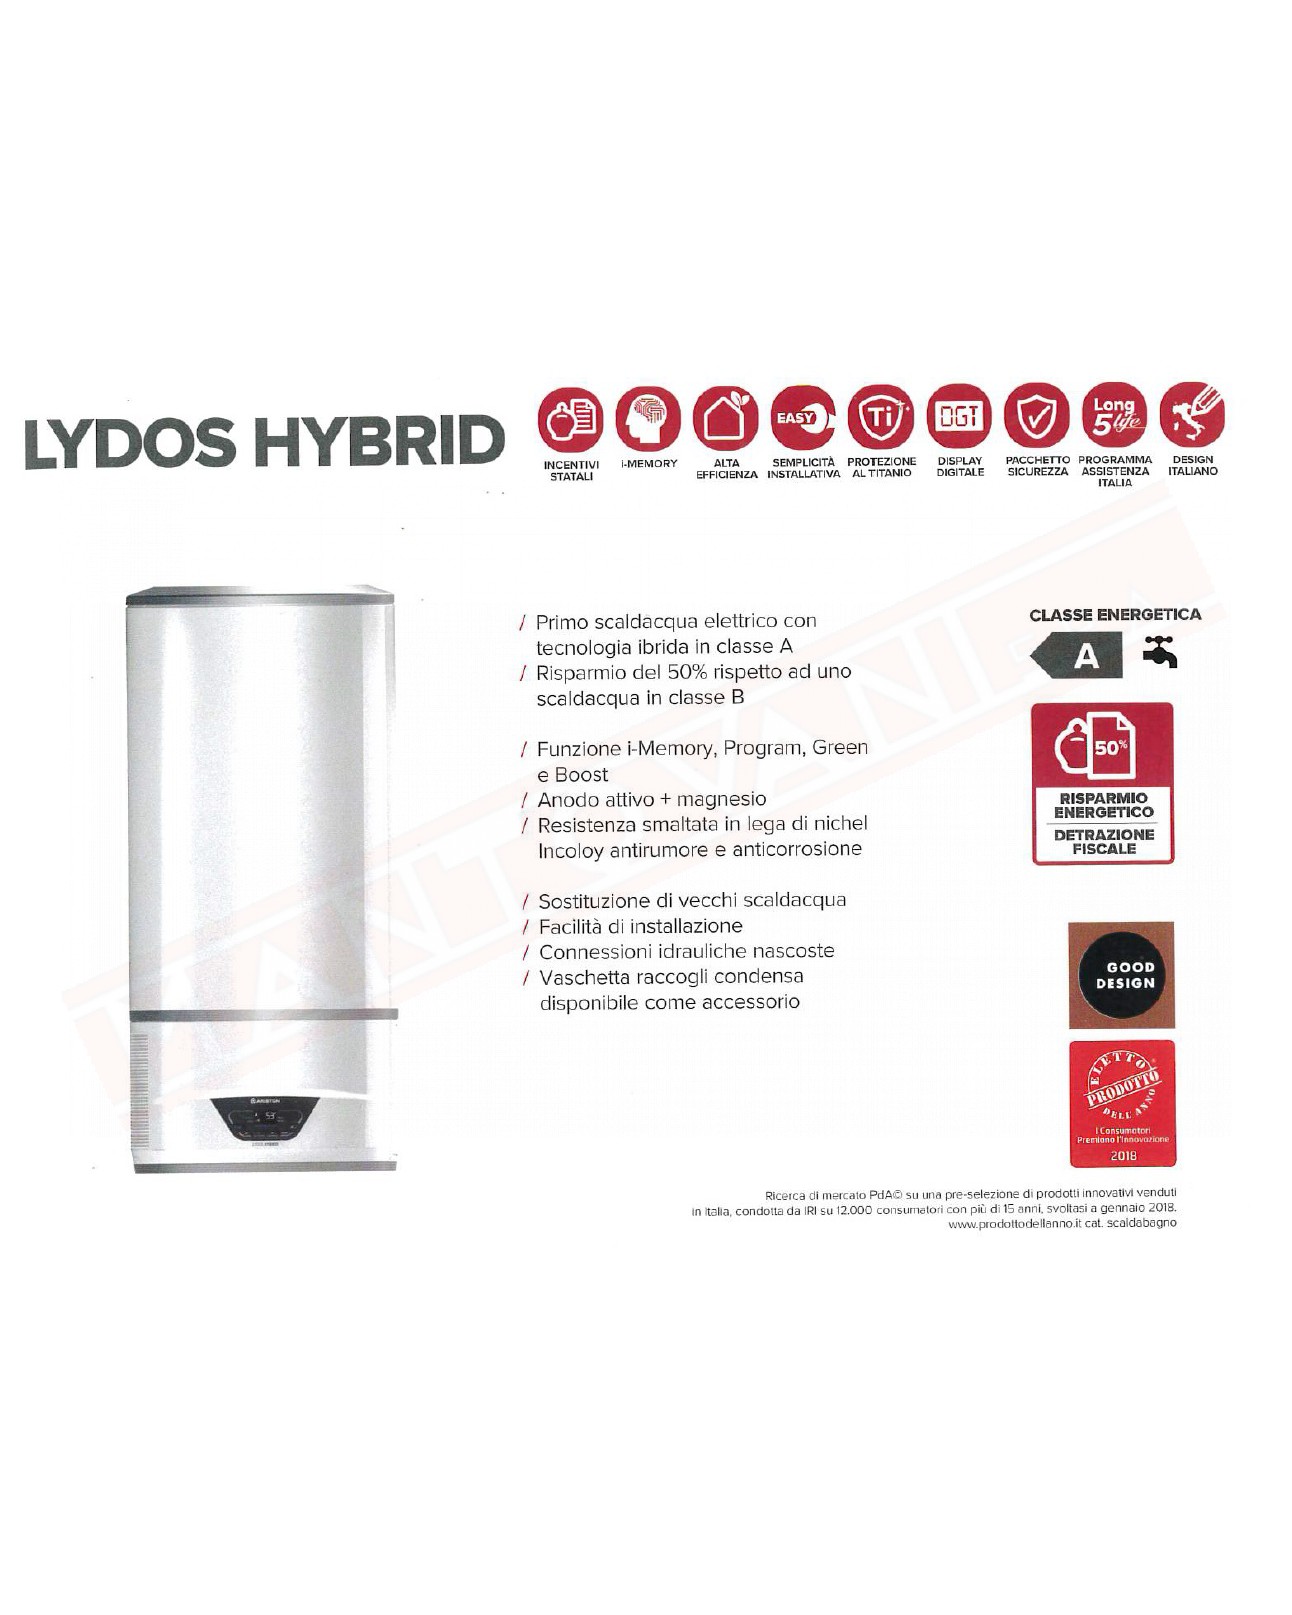 Ariston scaldabagno lydos hybrid 80 classe energetica A diametro 465 h 1009 senza vaschetta per condensa